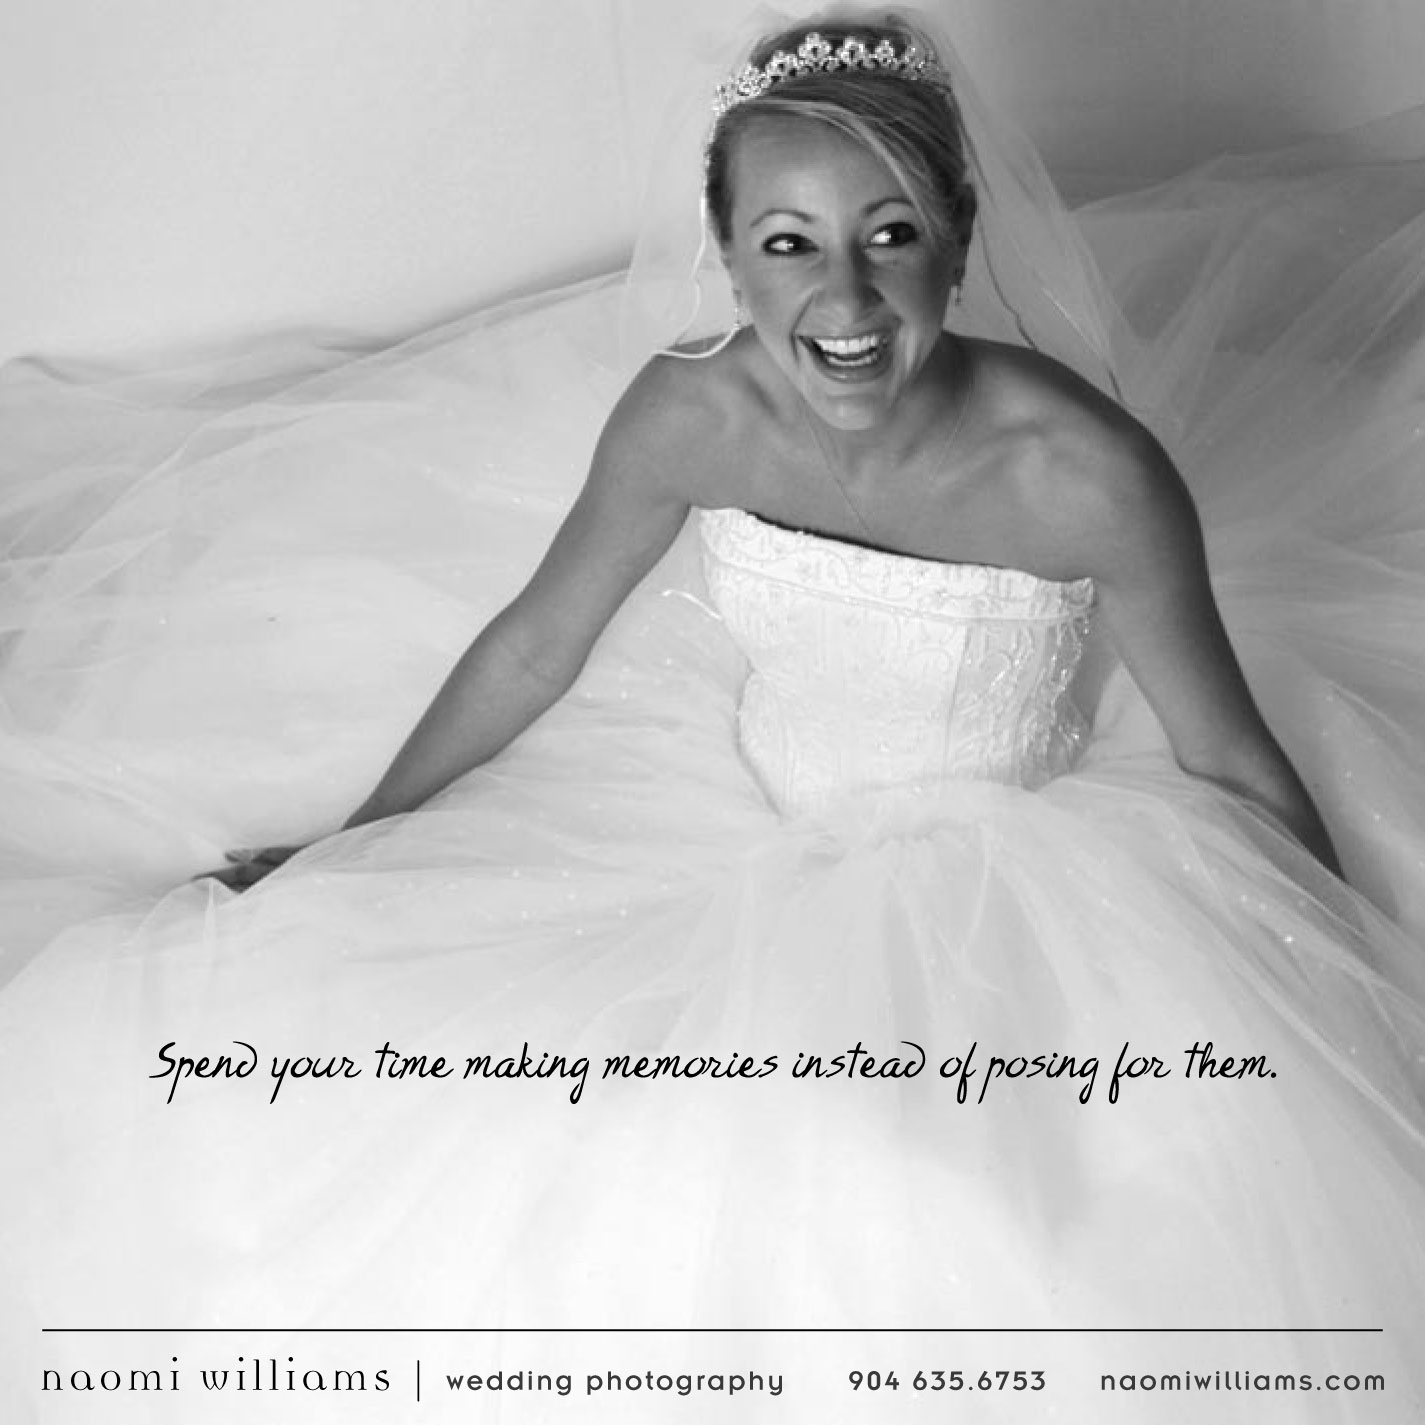 Marketing brochure for Naomi Williams Wedding Photography